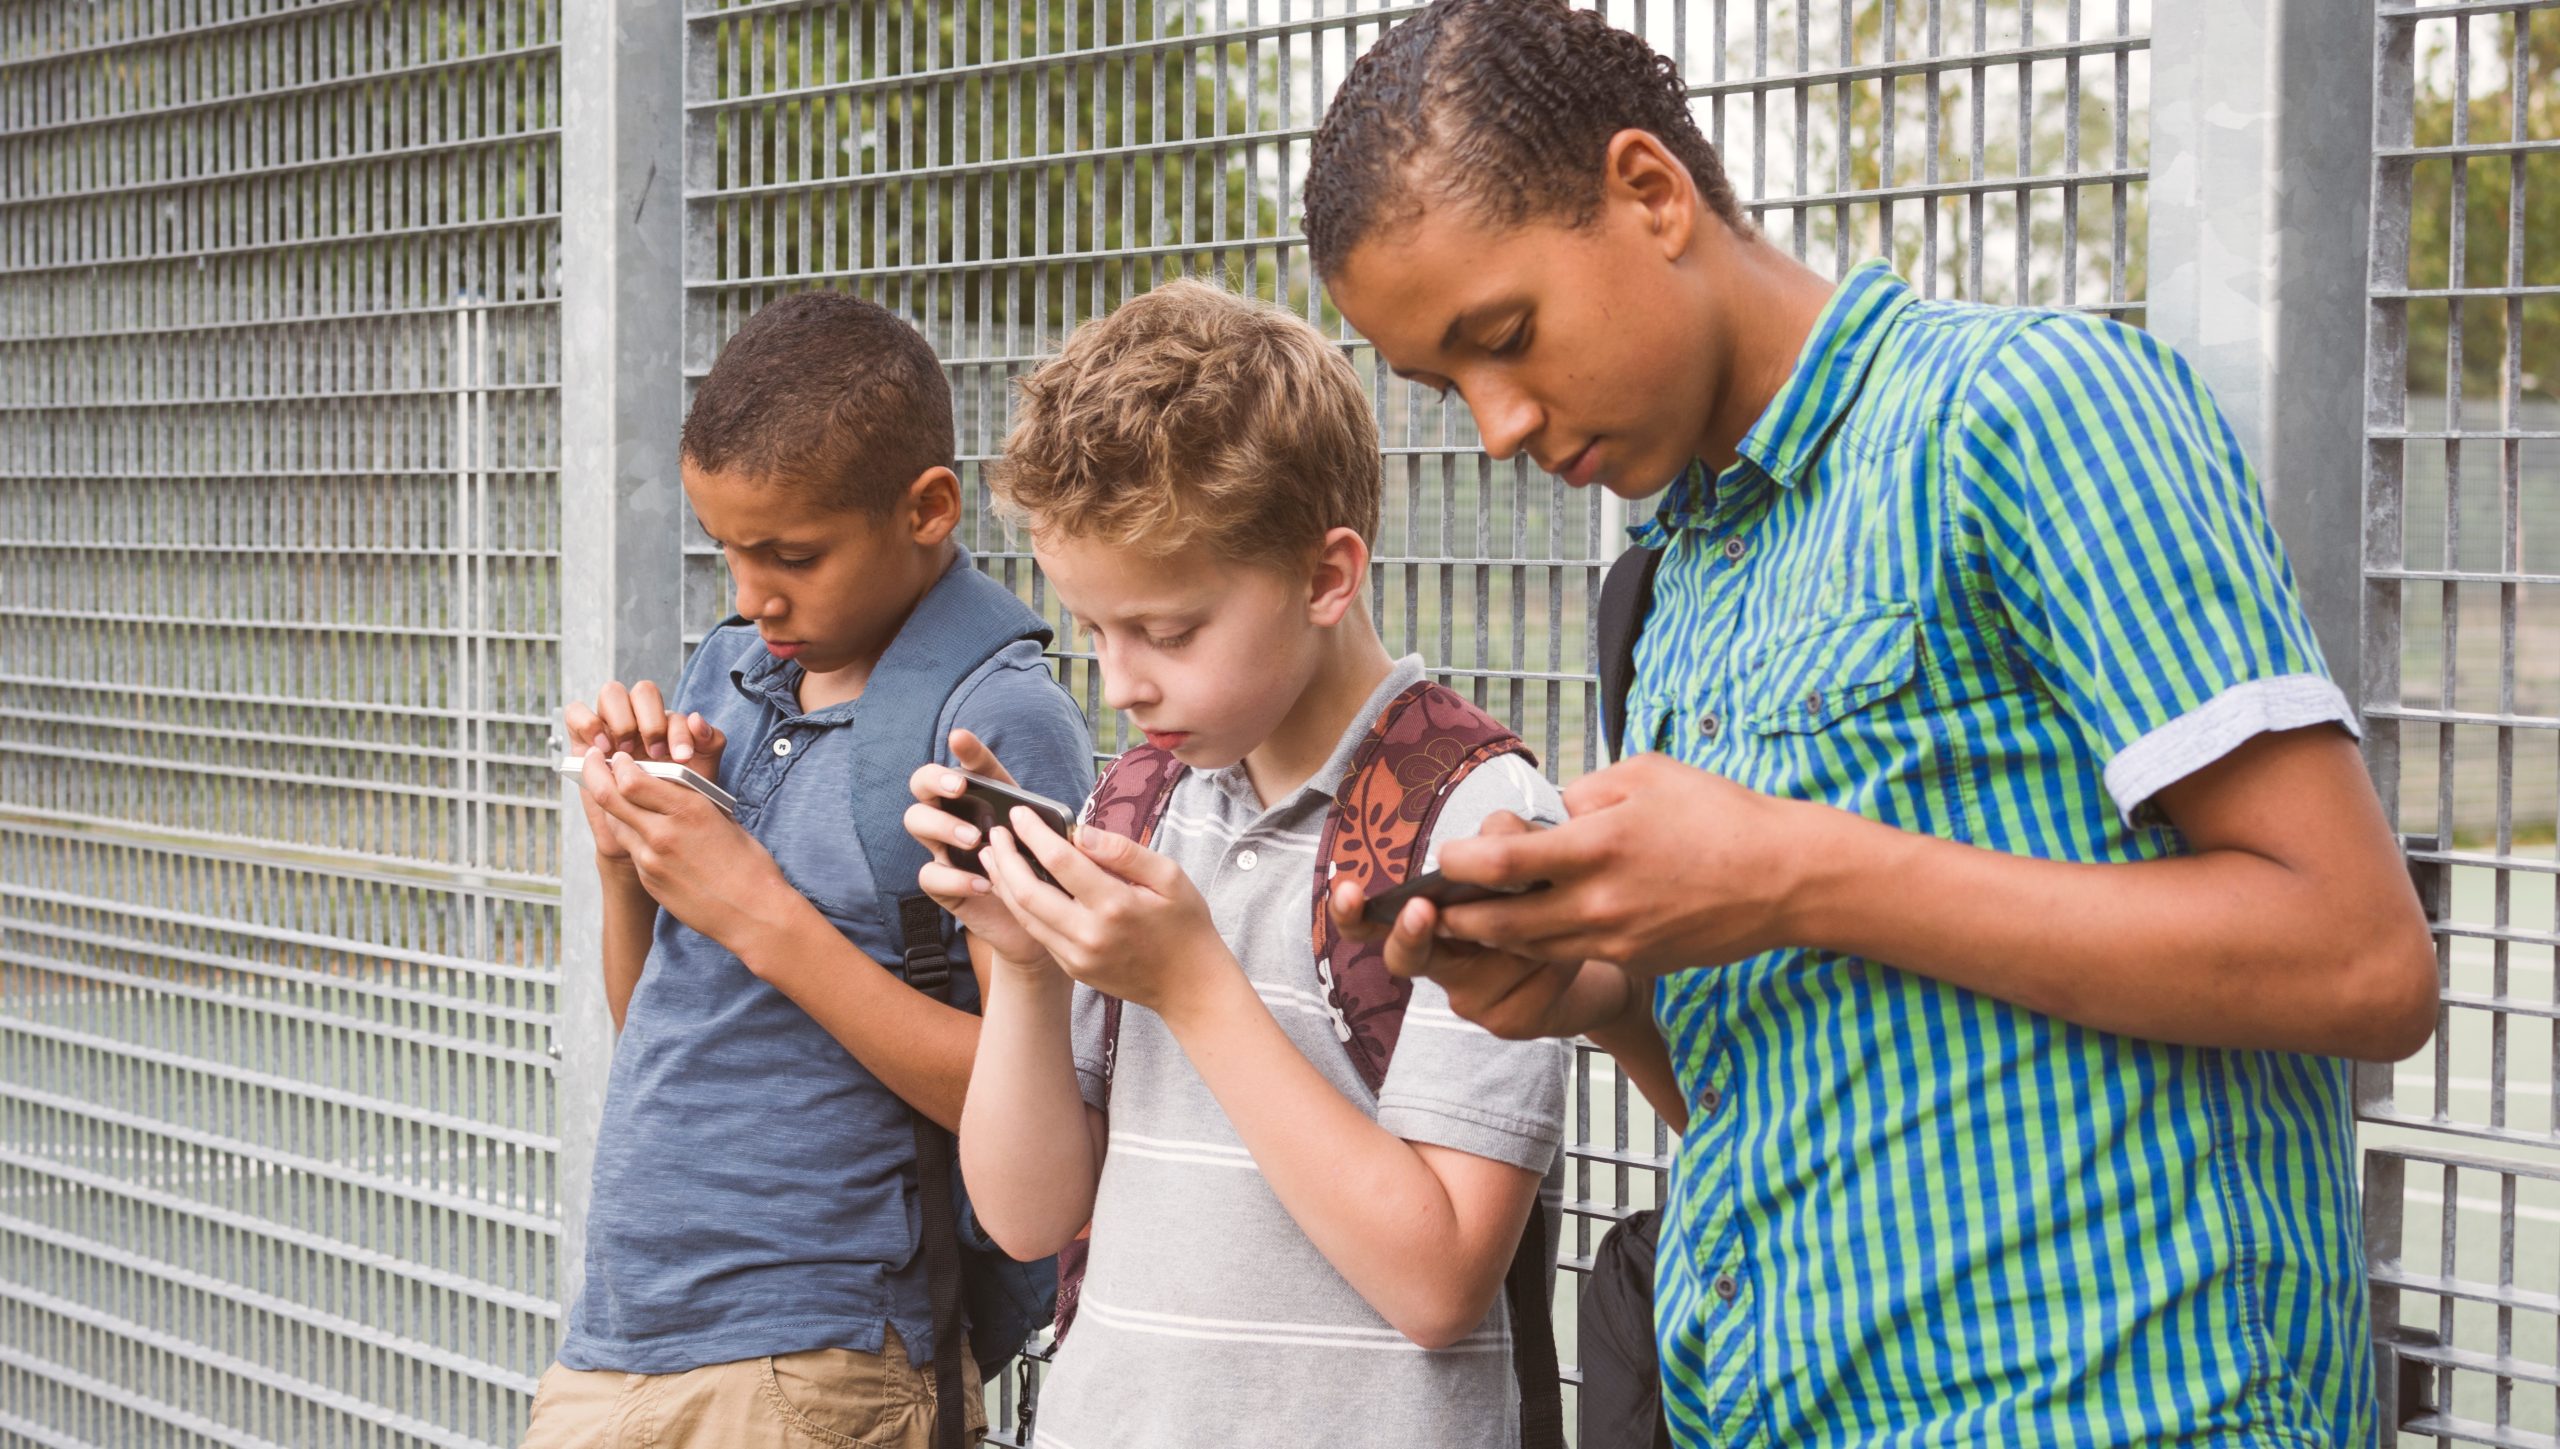 Three boys after school using their smartphone.